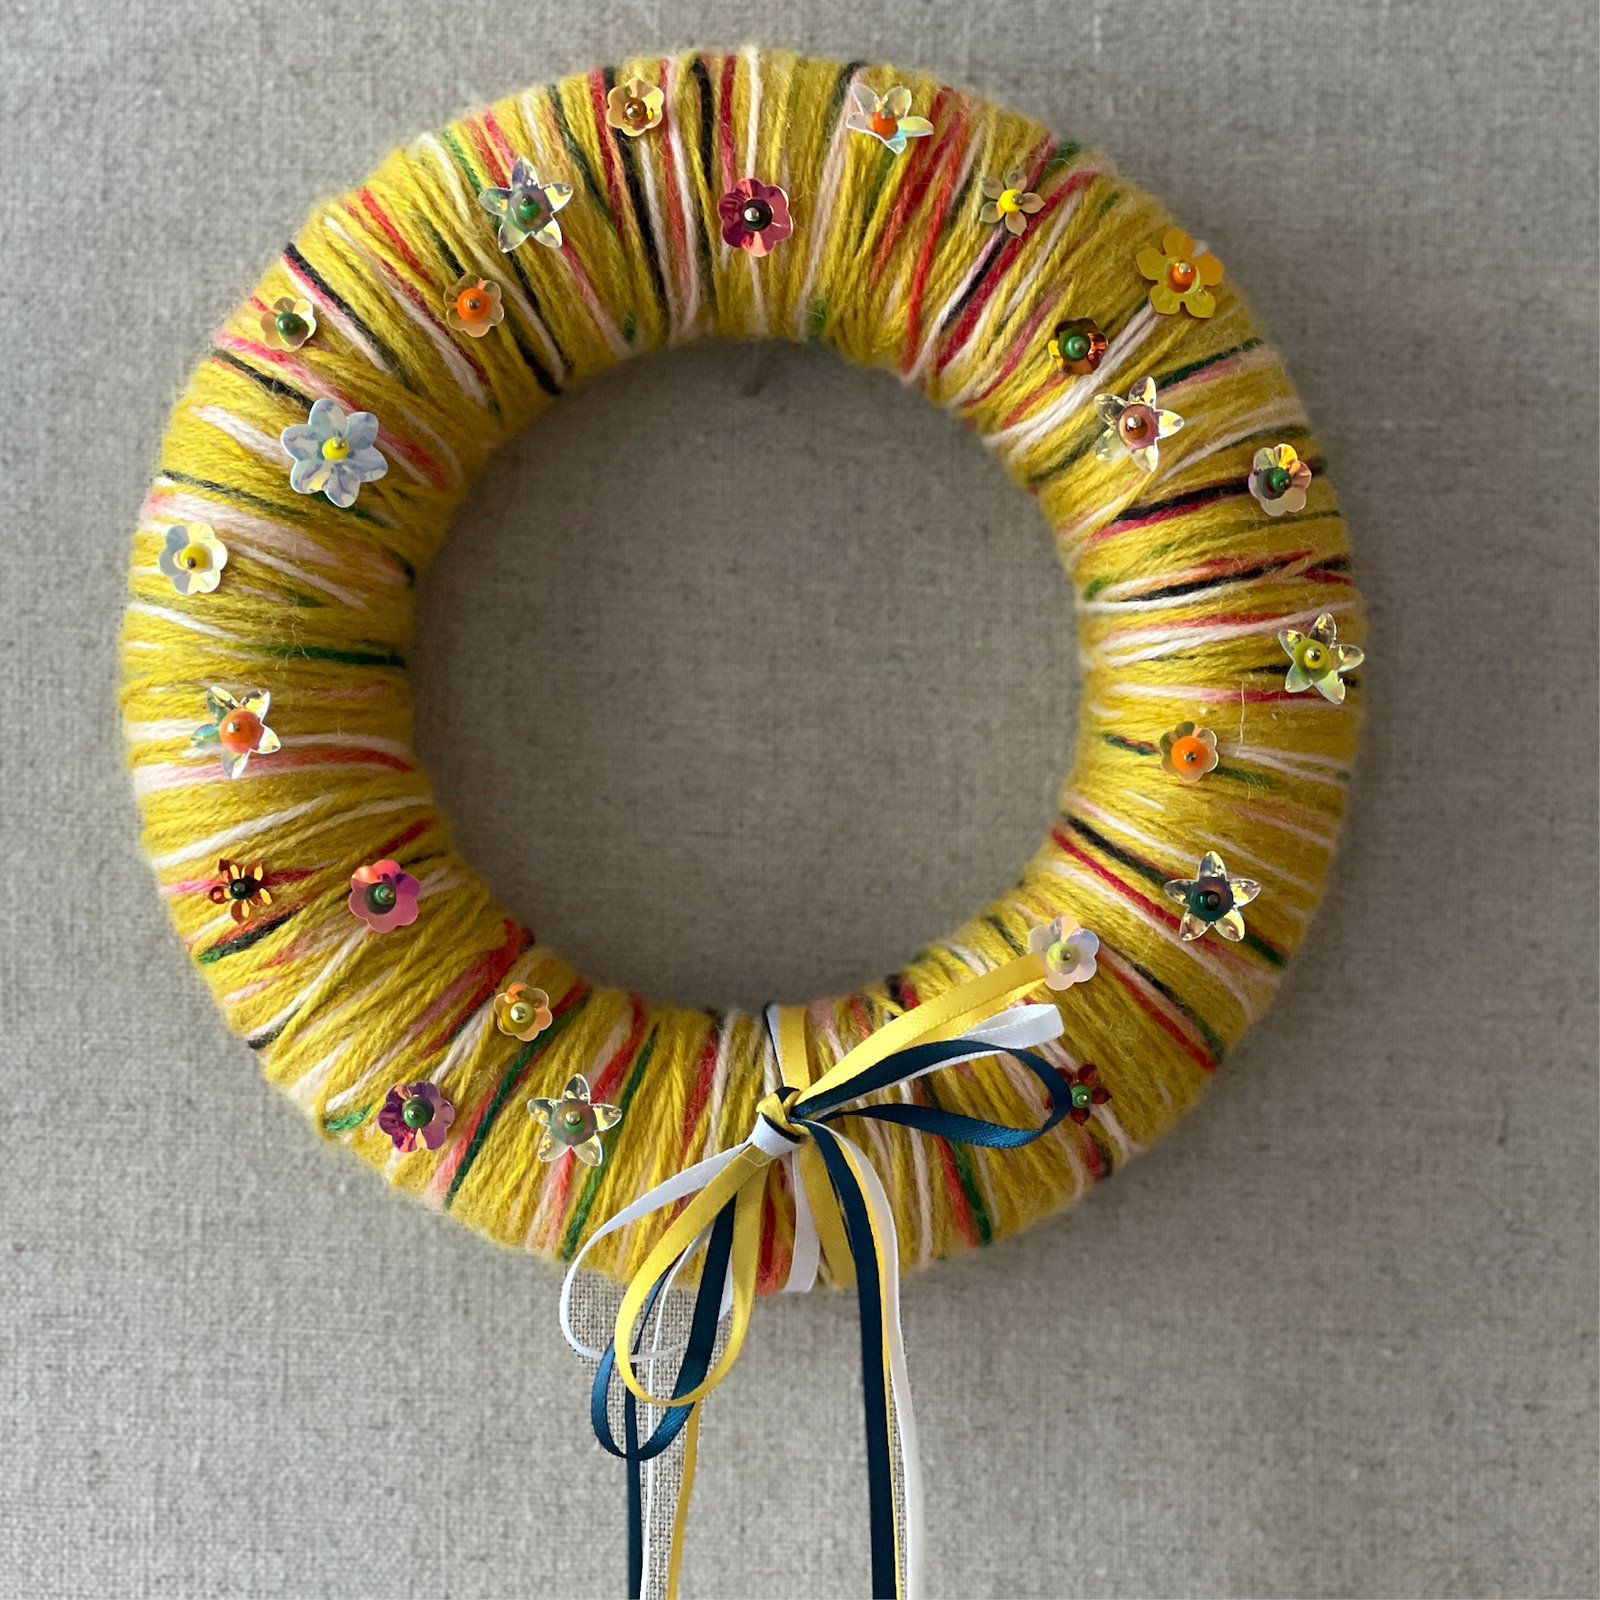 DIY: Yarn-wrapped Easter wreath DIY4308-step4.jpg